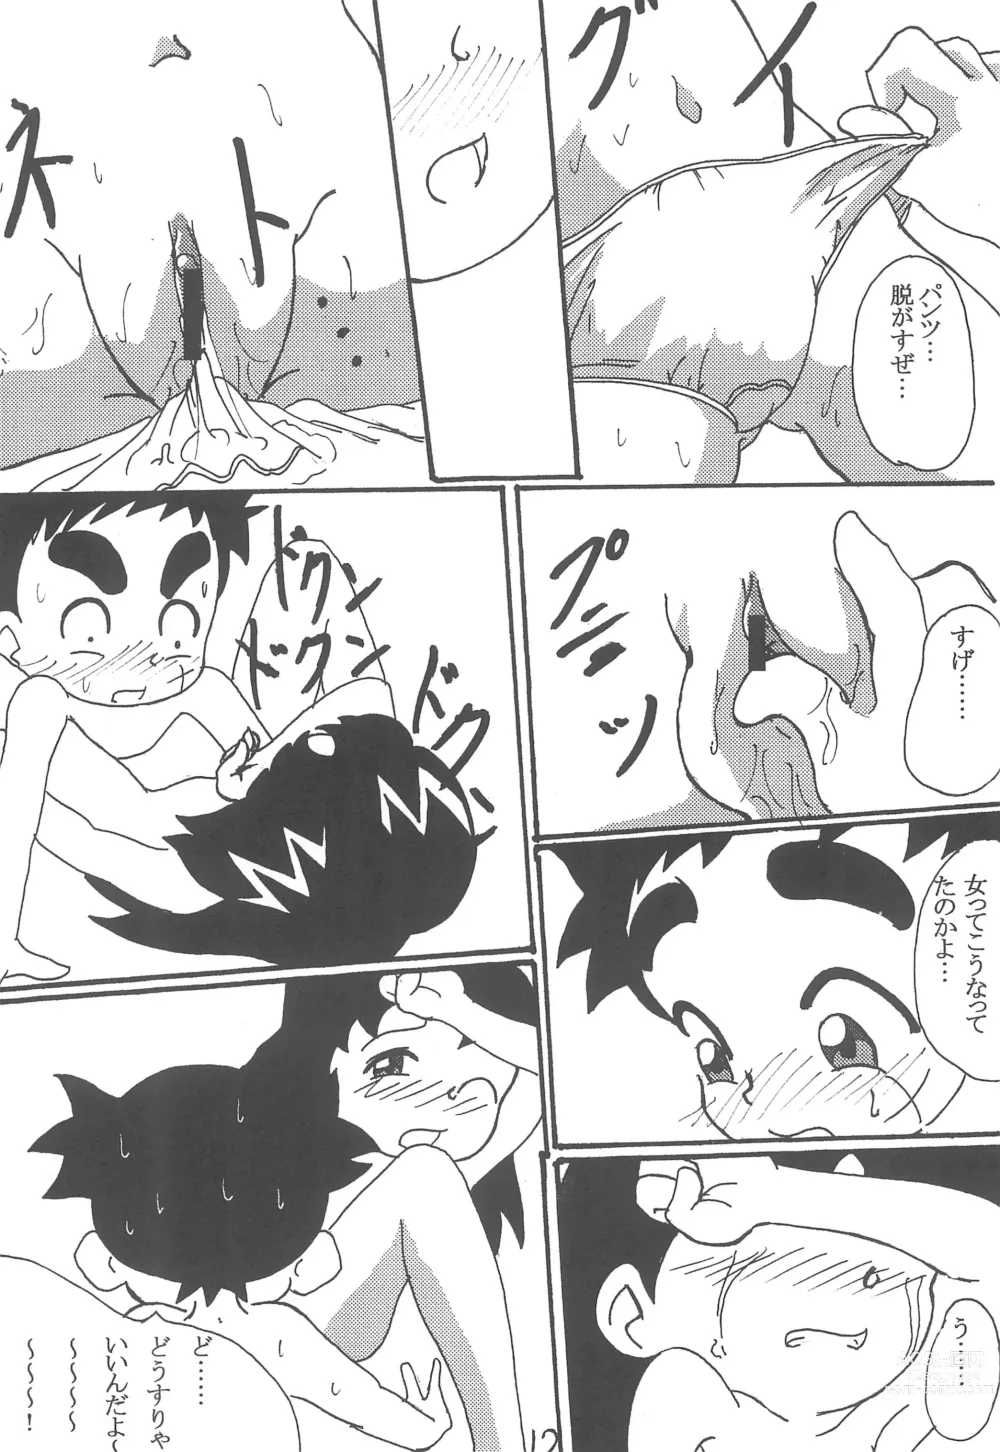 Page 12 of doujinshi Mou Hitotsu no Omoide